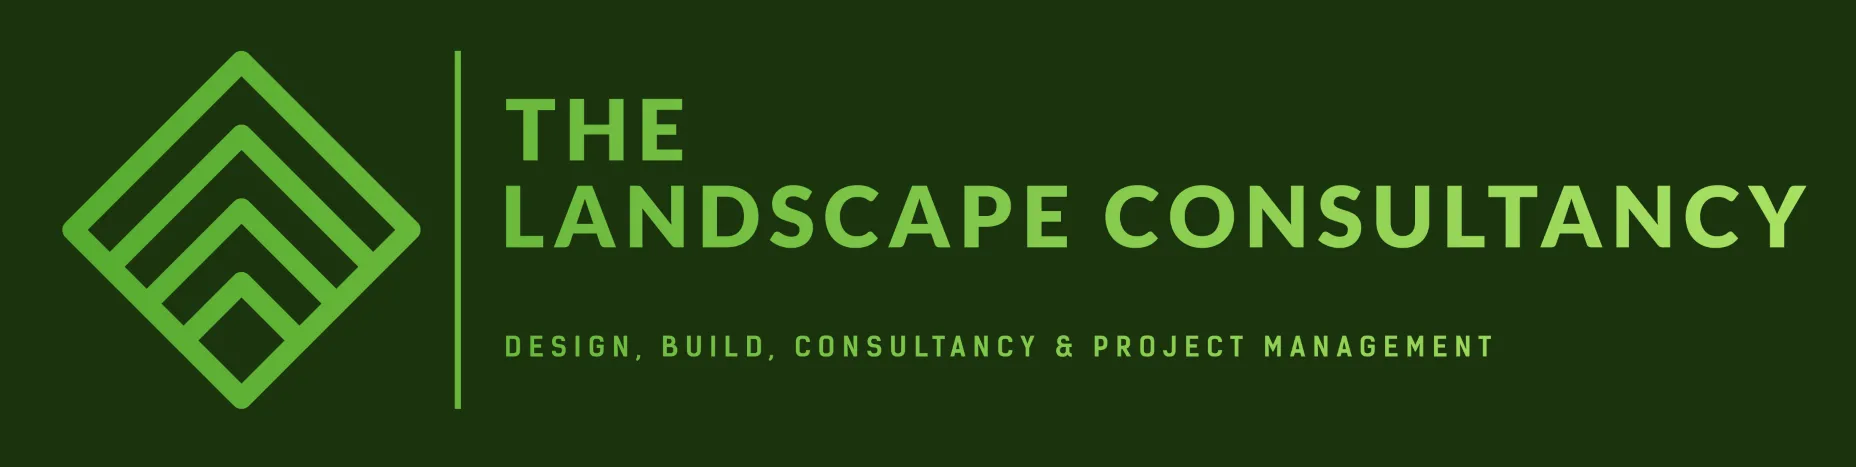 The Landscape Consultancy Logo